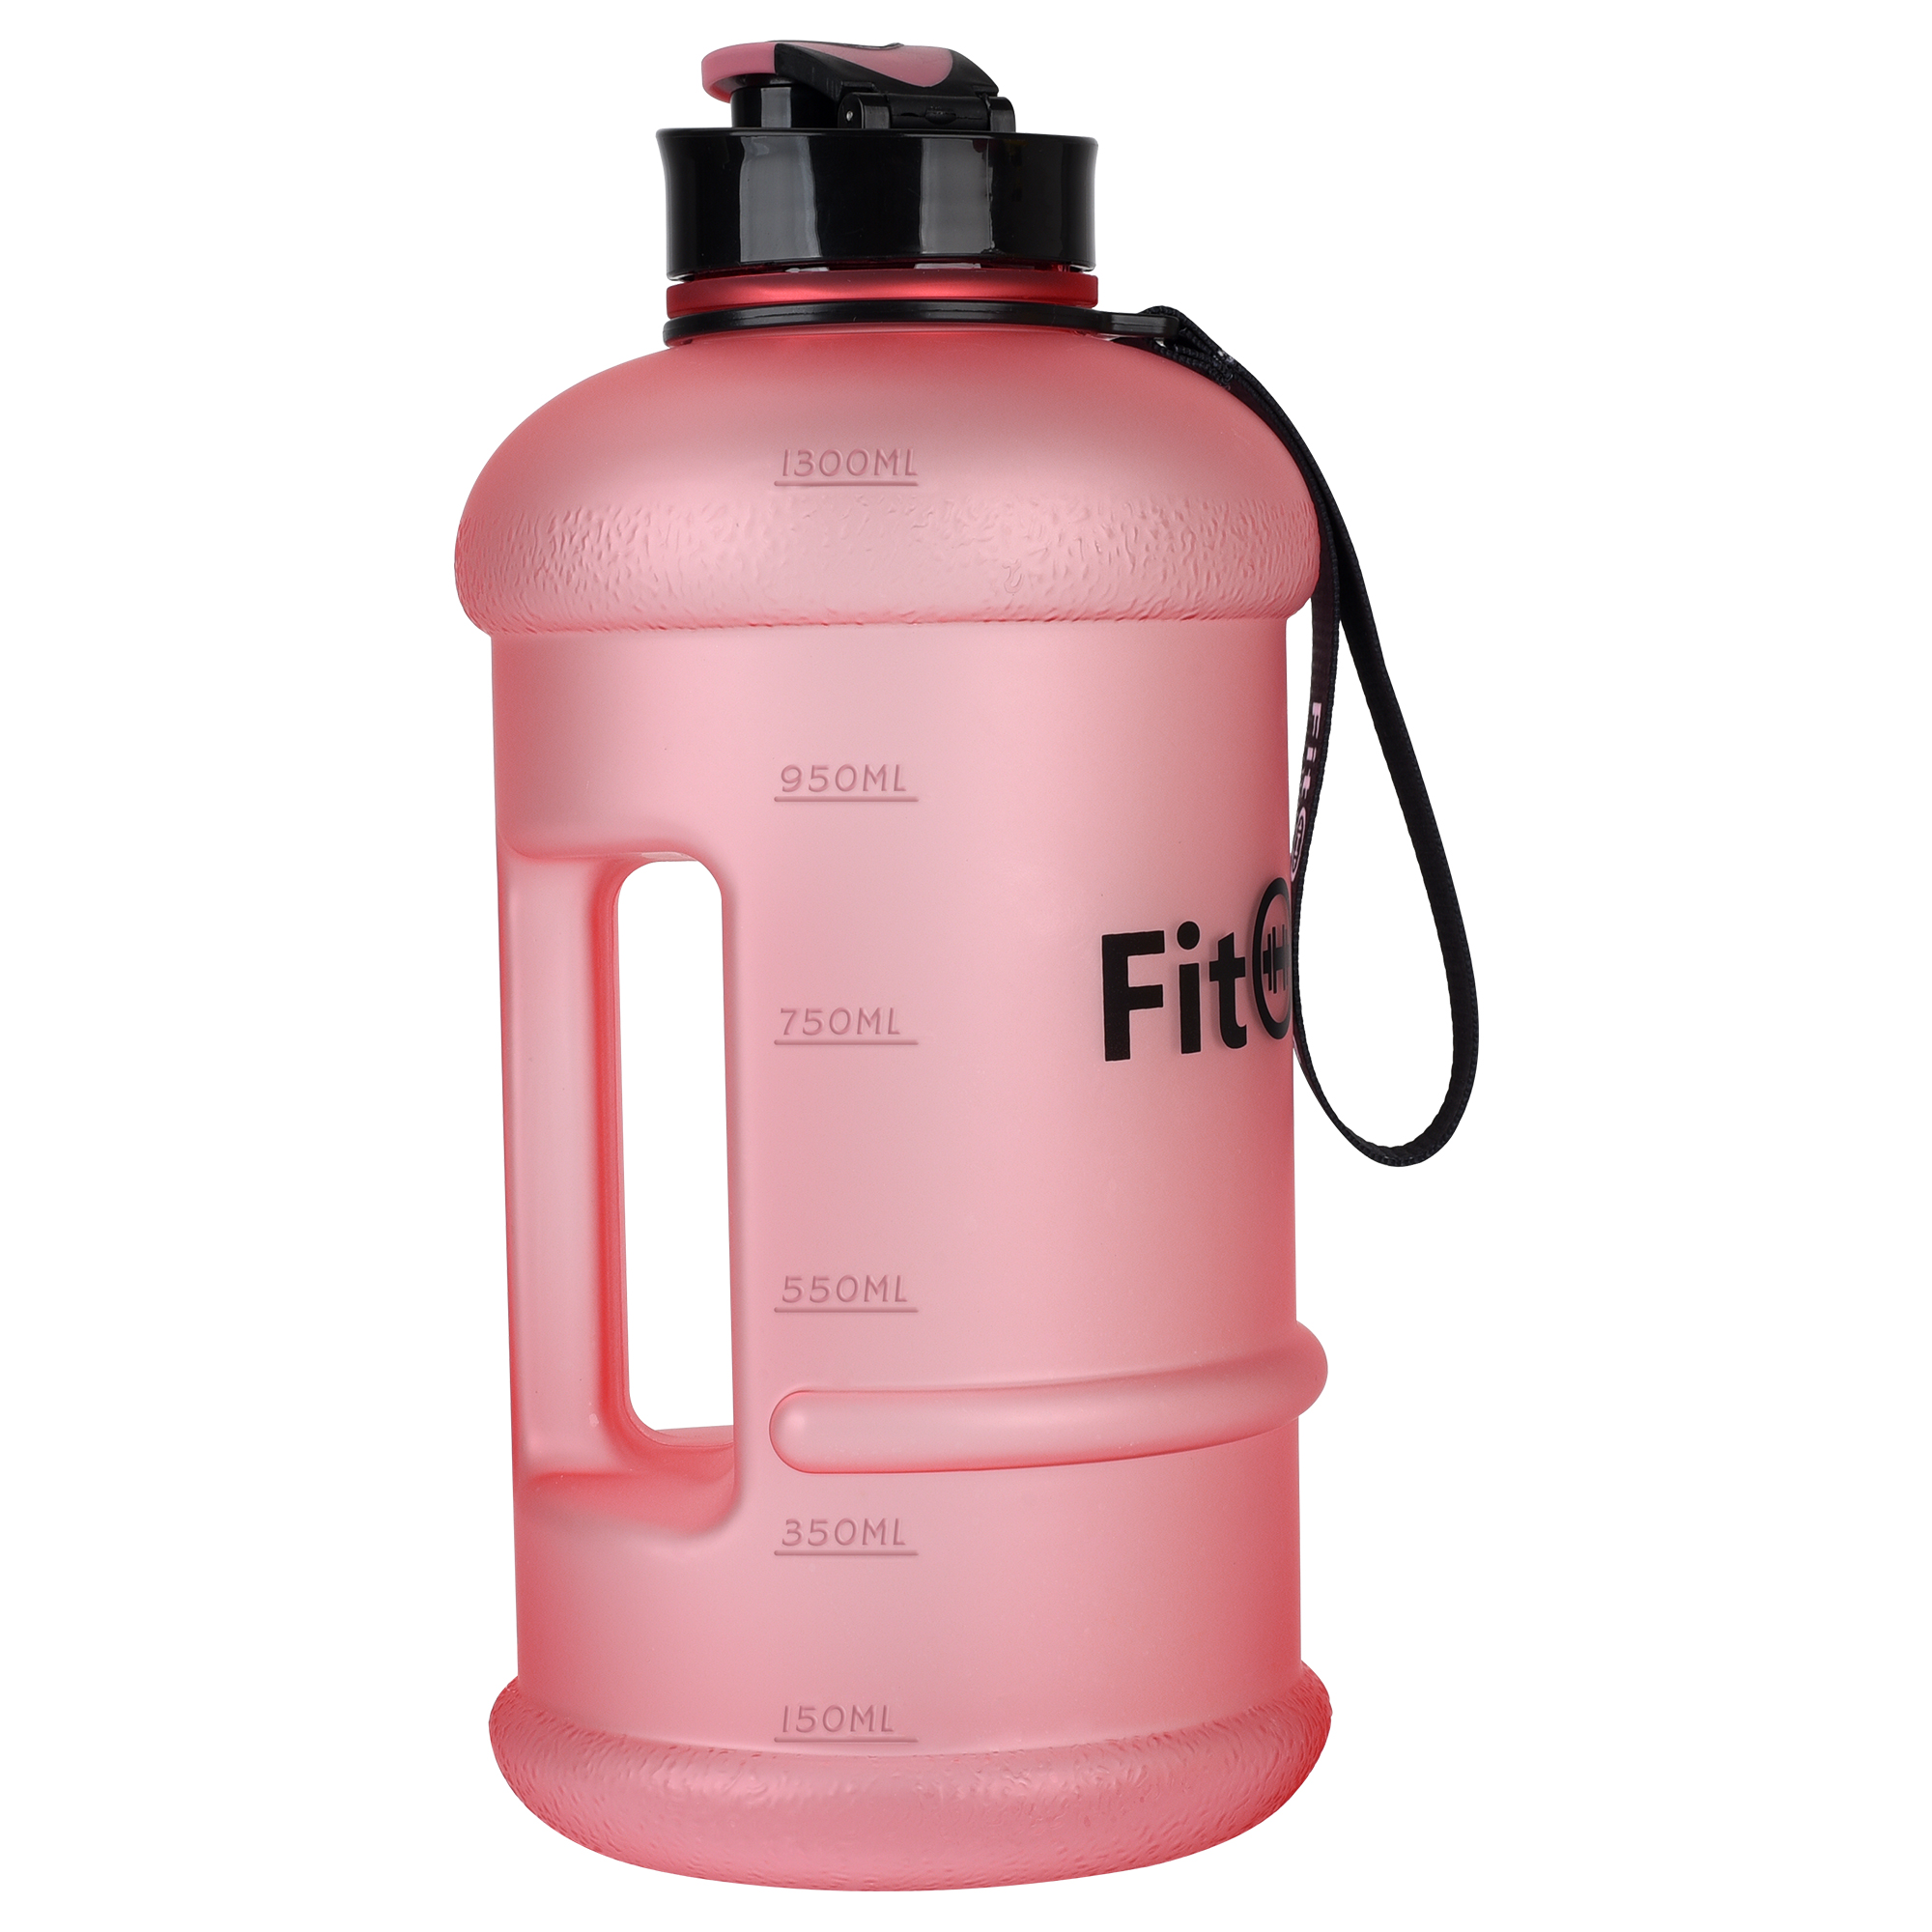 Brand Fitoness Jug Bottle 1.3l / 44oz Pink Sports